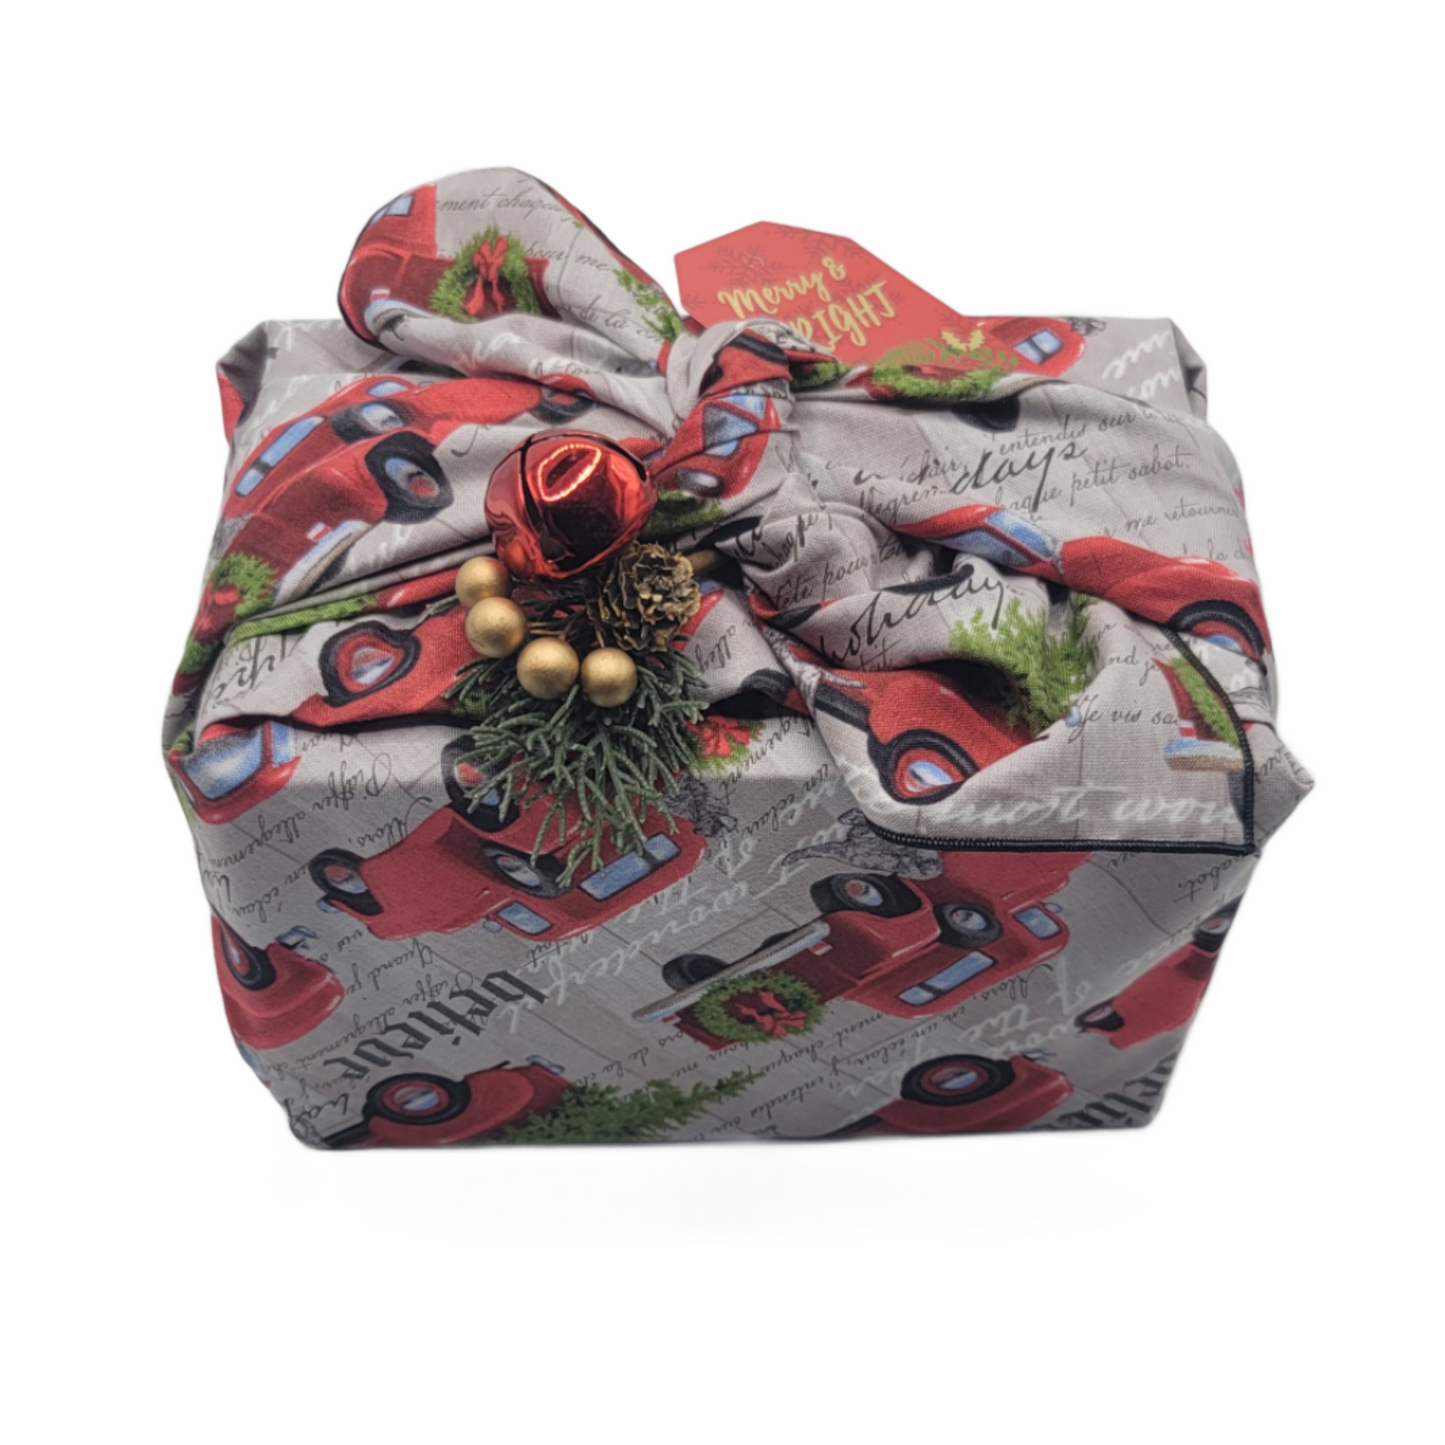 Furoshiki 3 pc Fabric Gift Wrap Kit - Holiday/Greyhounds & Red Trucks